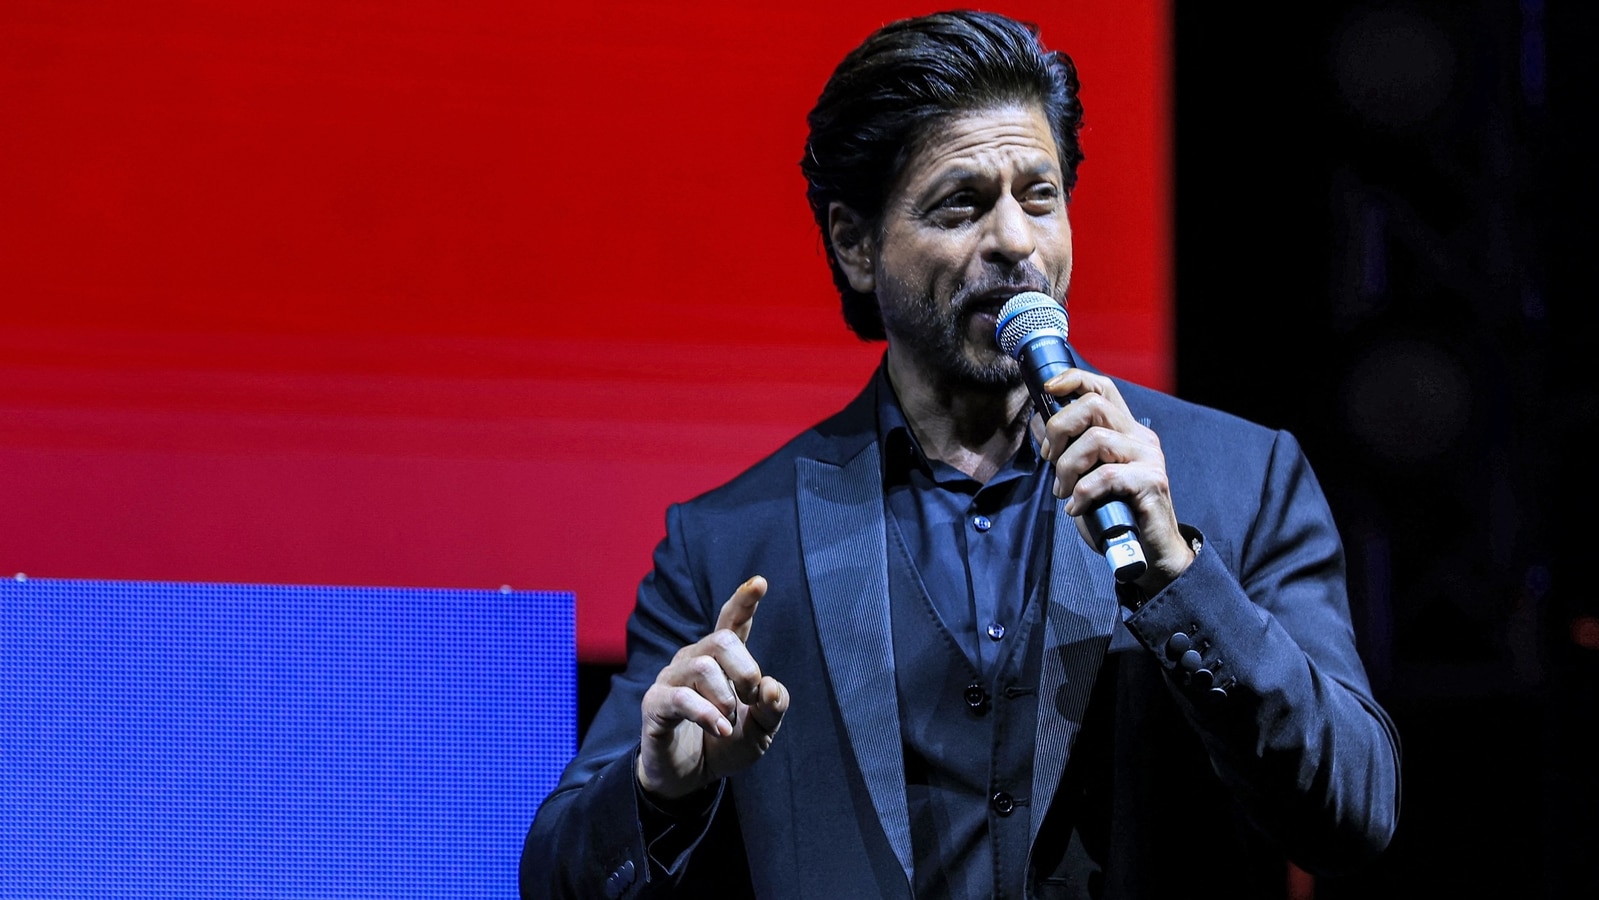 Shah Rukh Khan to receive Entertainer of Indian Cinema award